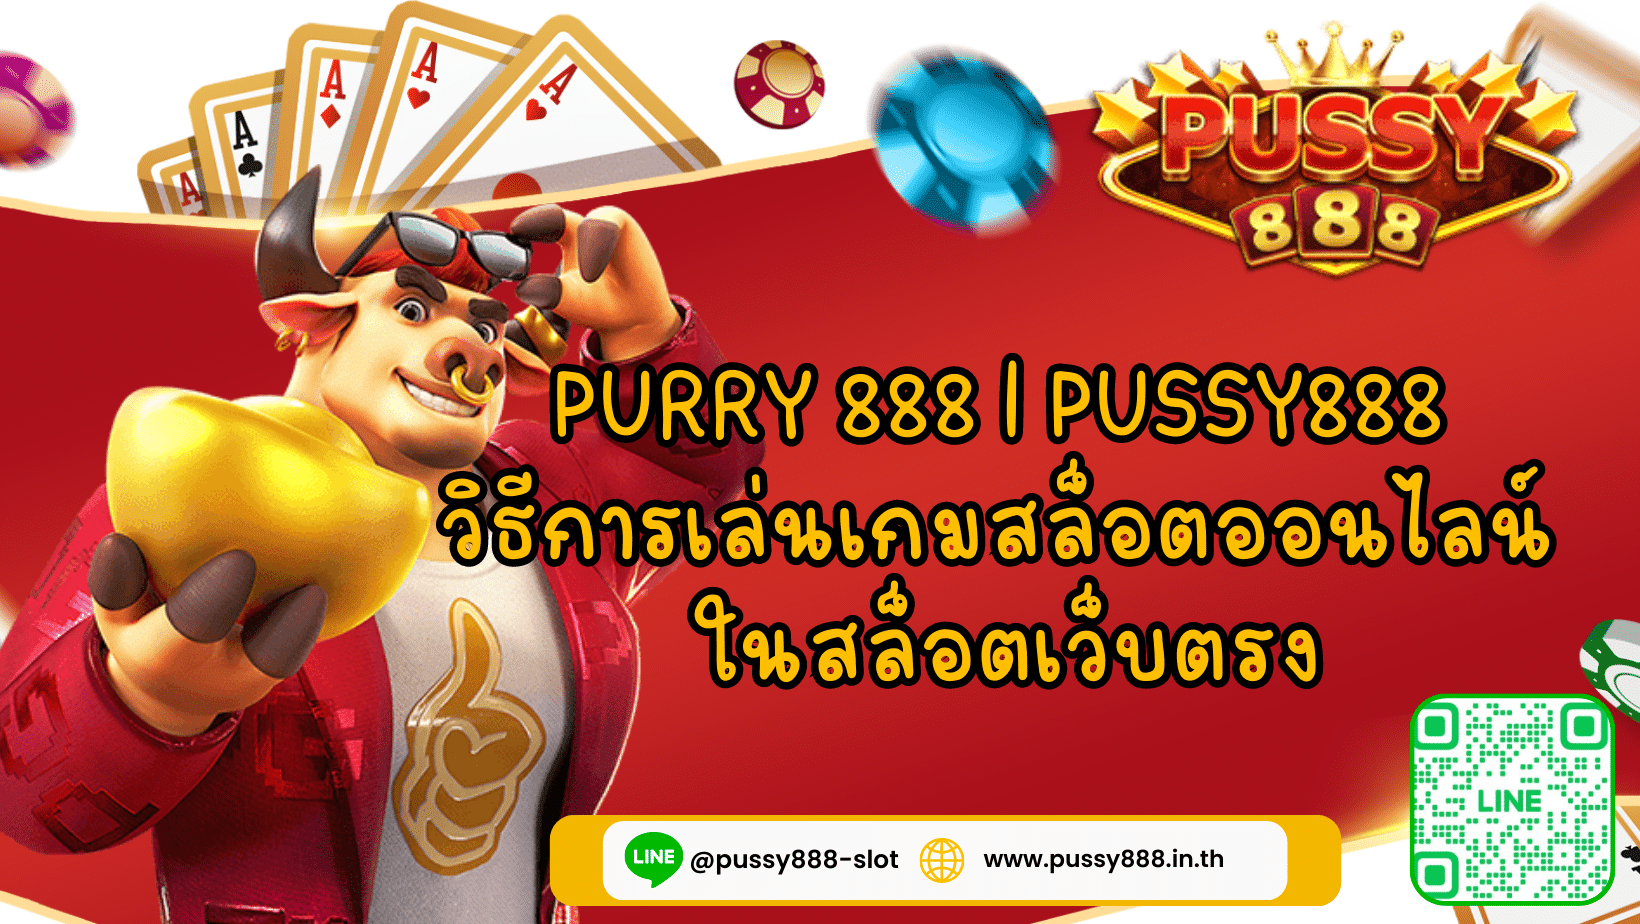 Purry 888